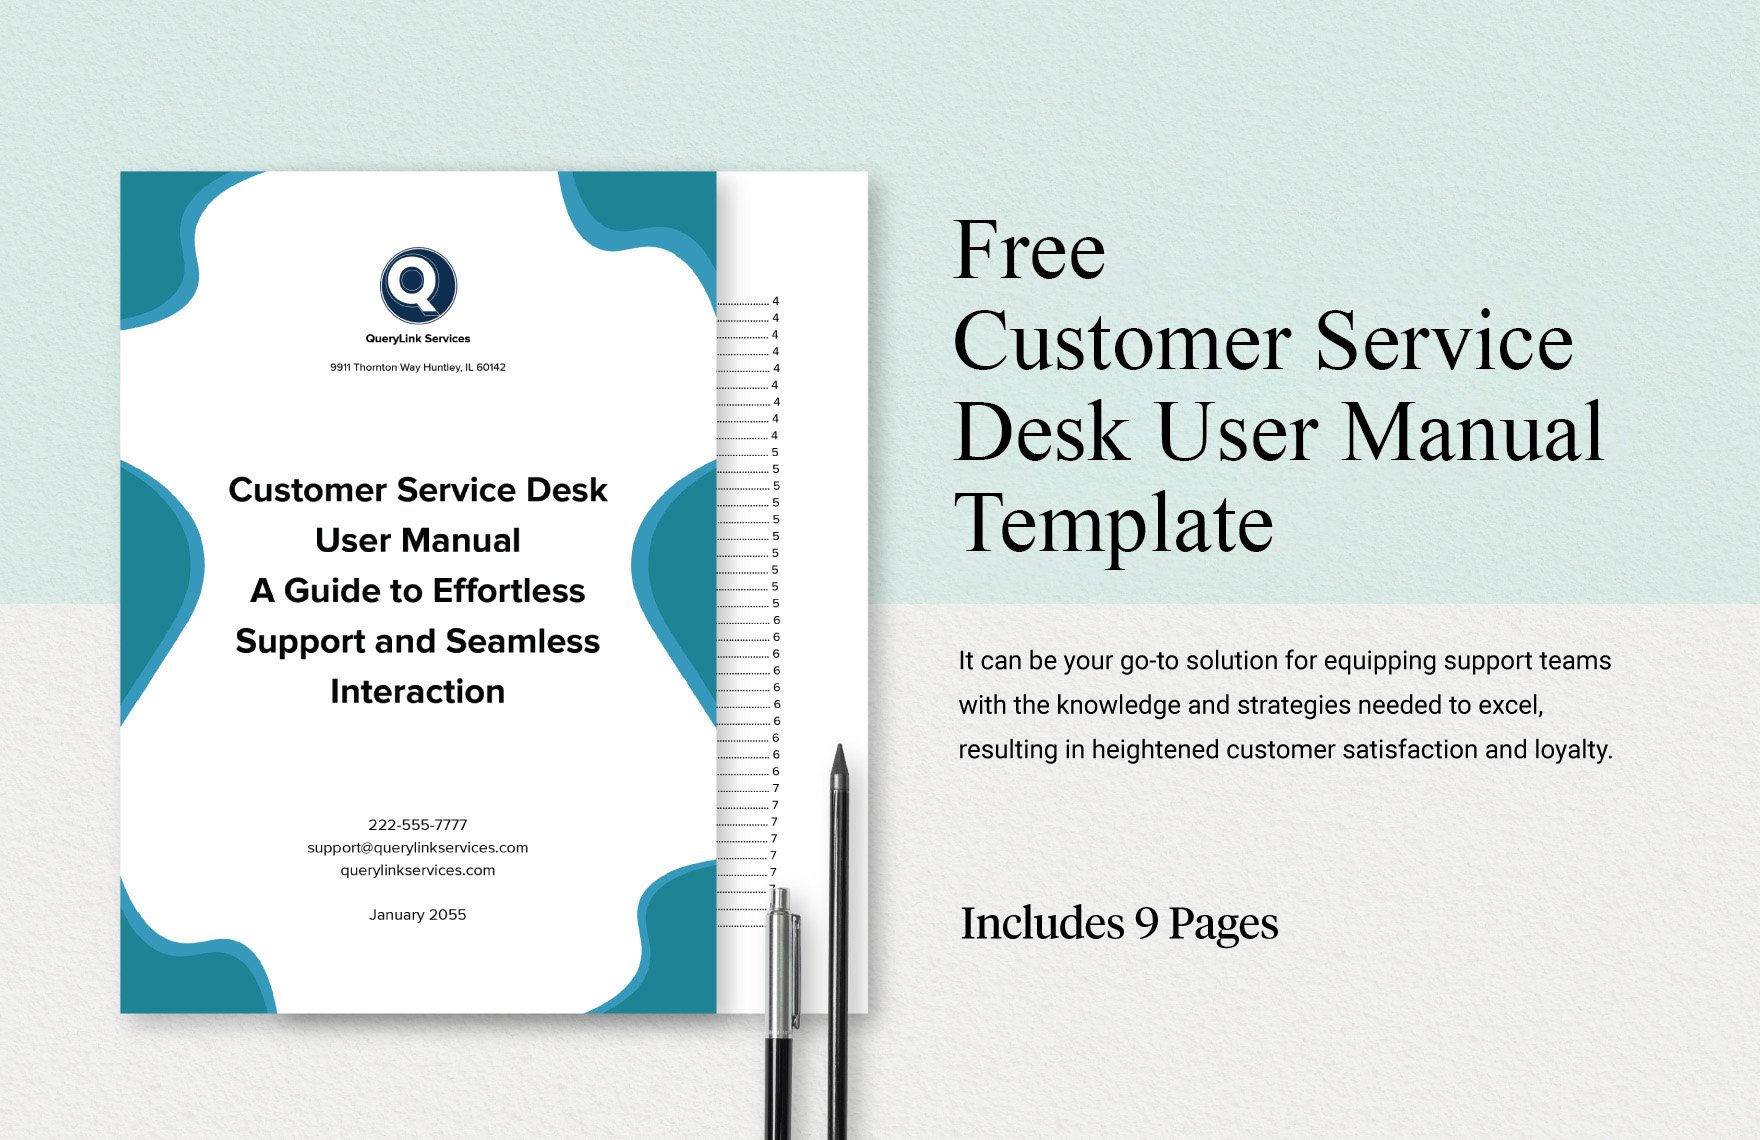 Free Customer Service Desk User Manual Template